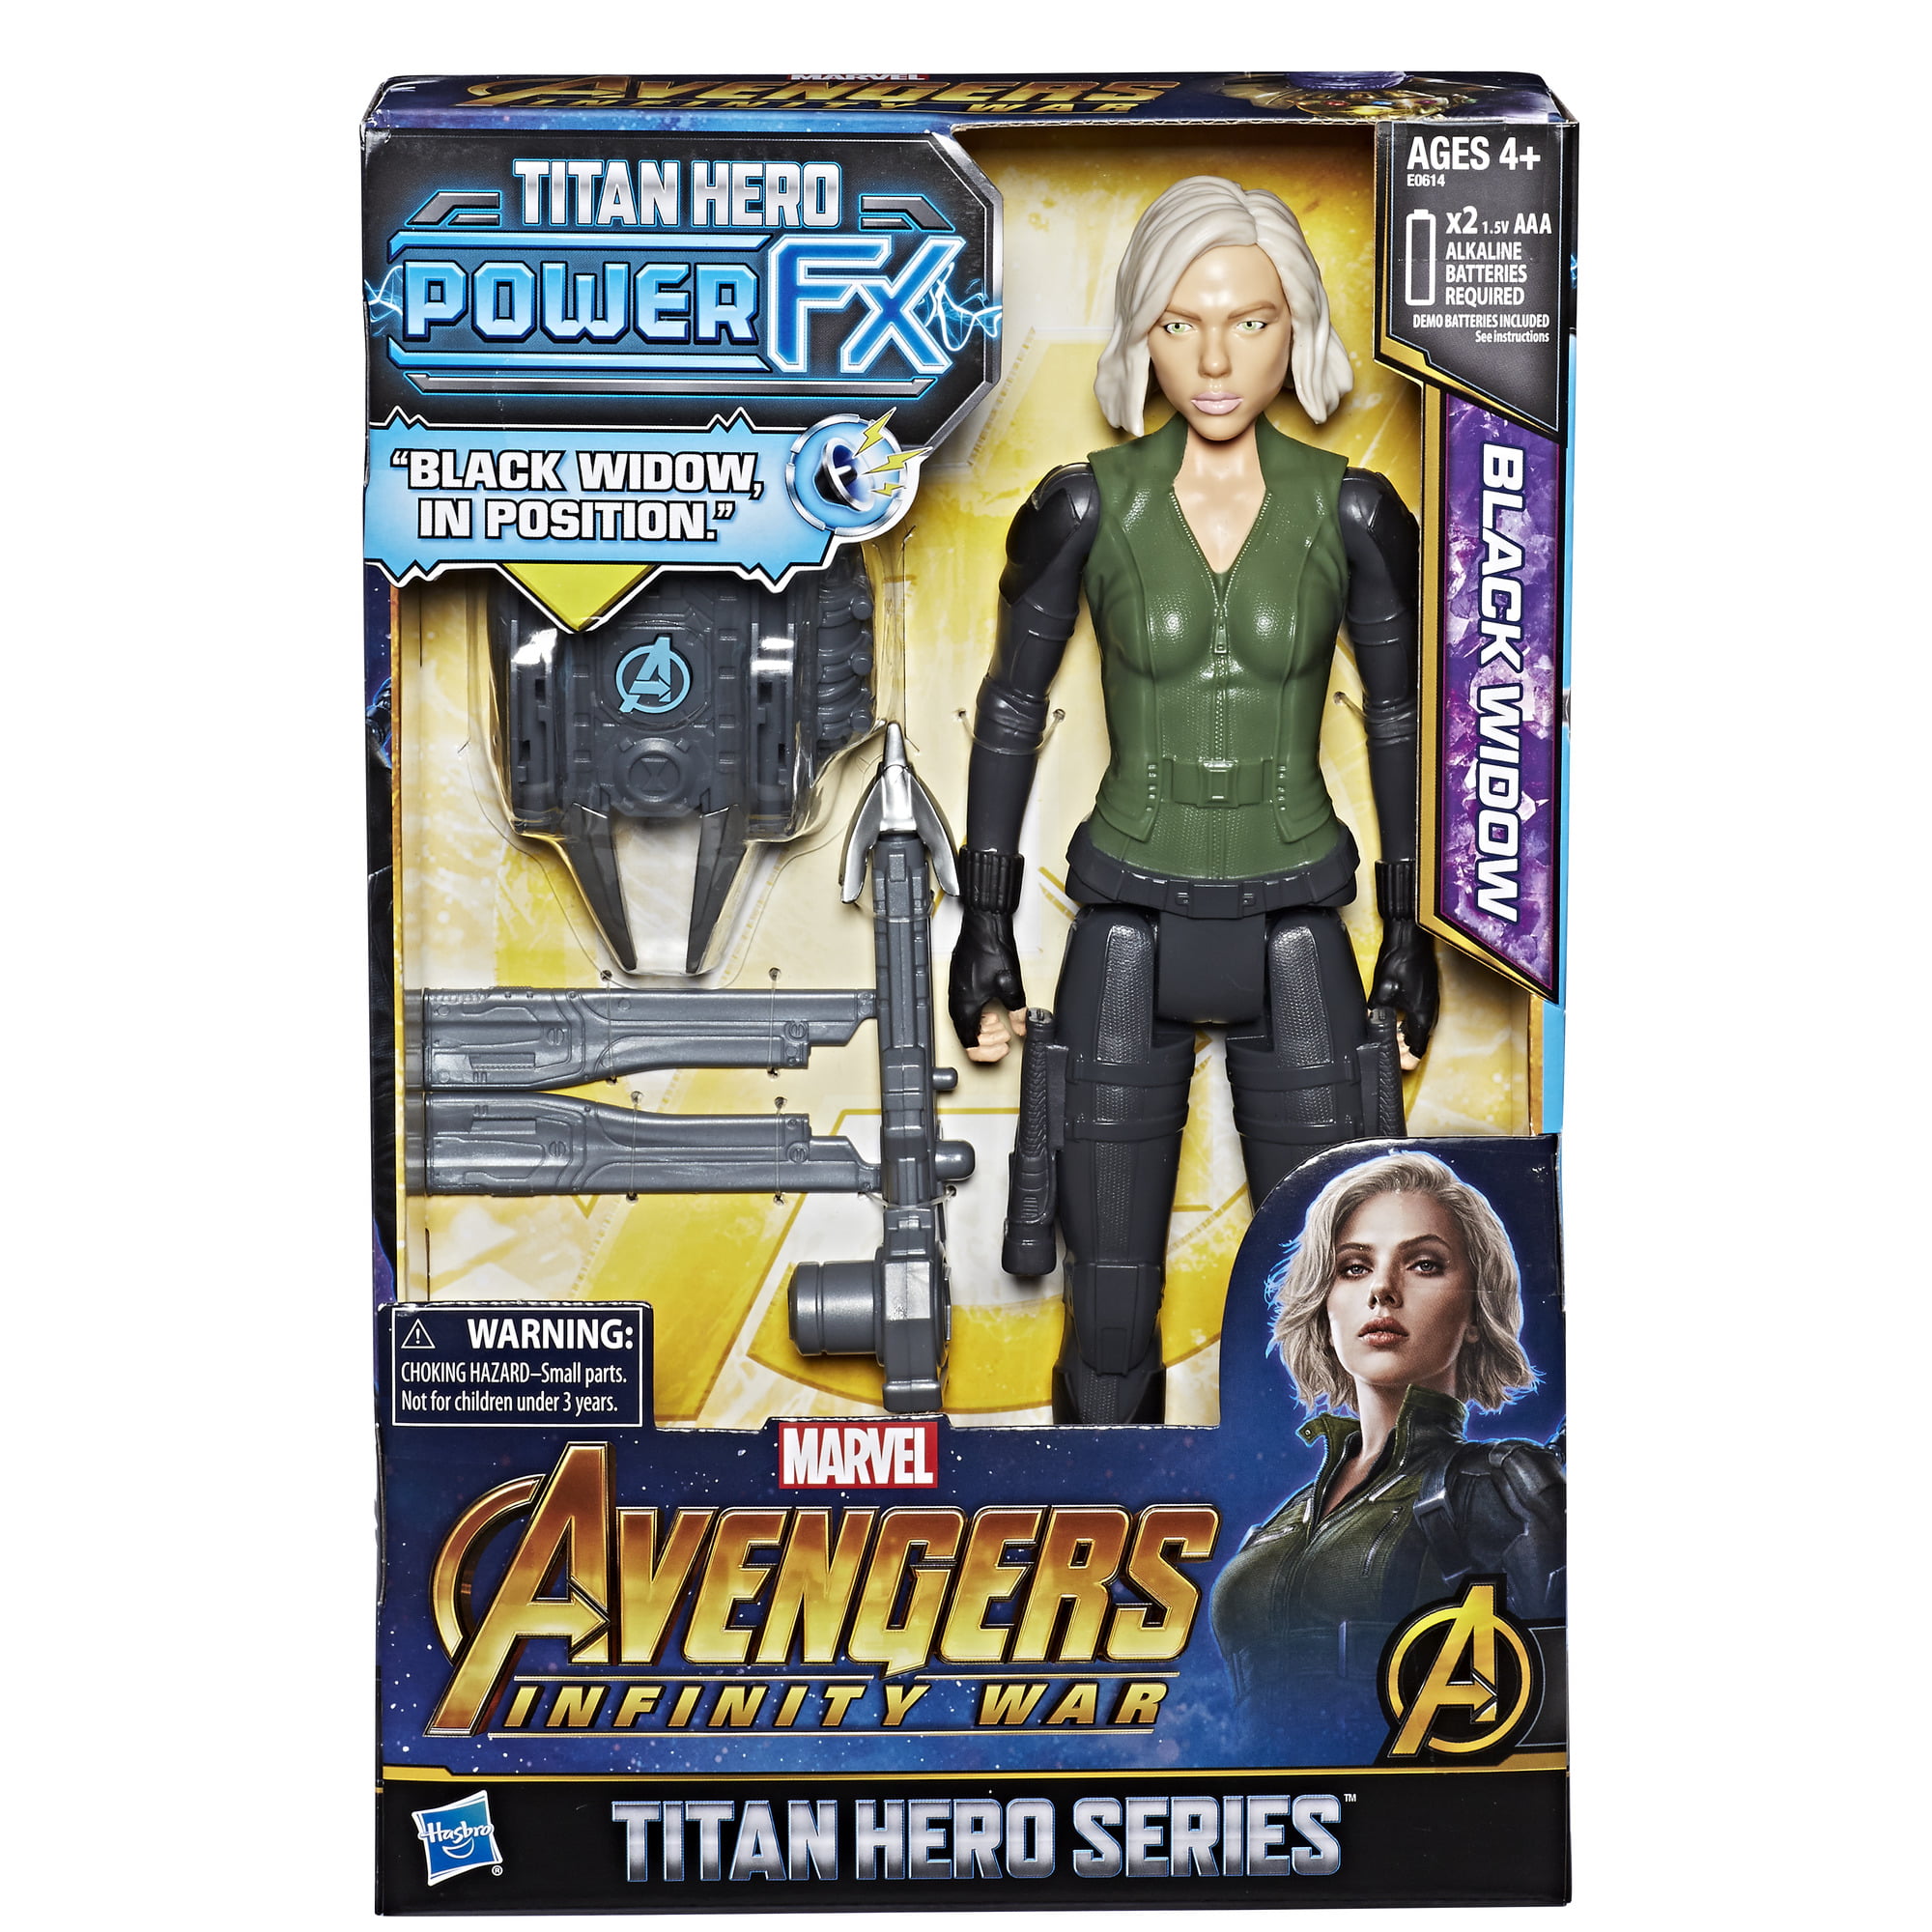 Marvel Avengers: Infinity War Titan Hero Power FX Black Widow